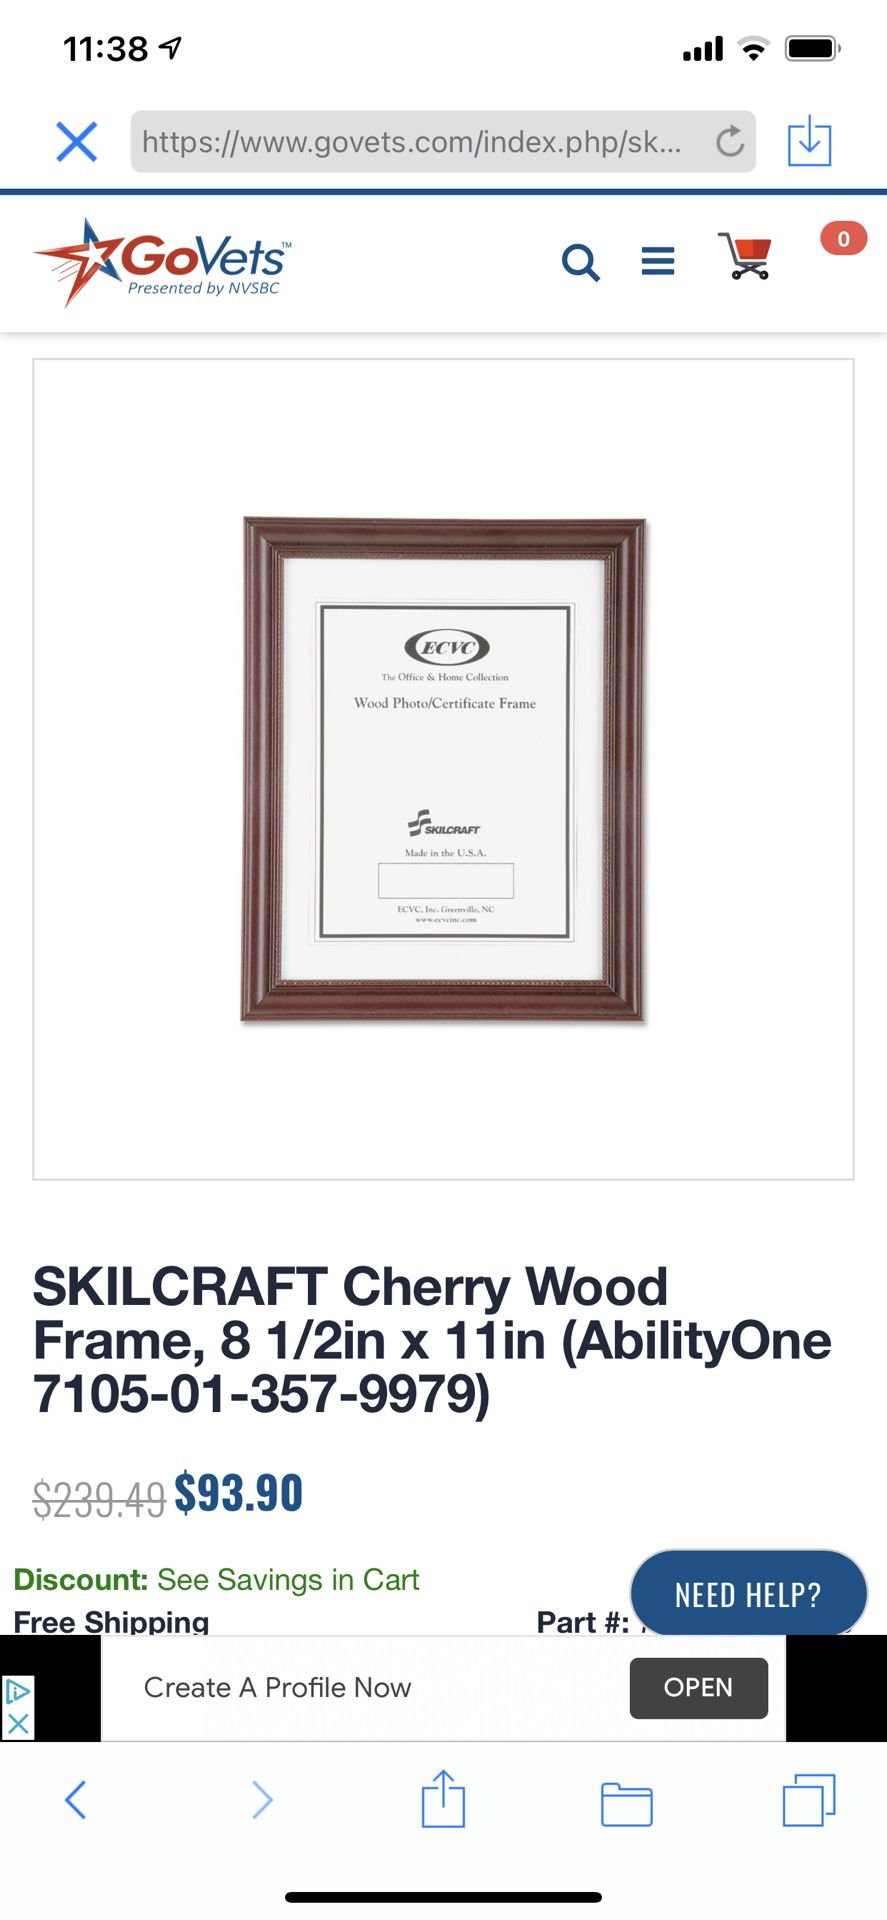 SKILCRAFT Cherry Wood Frame, 8 1/2in x 11in (AbilityOne 7105-01-357-9979)